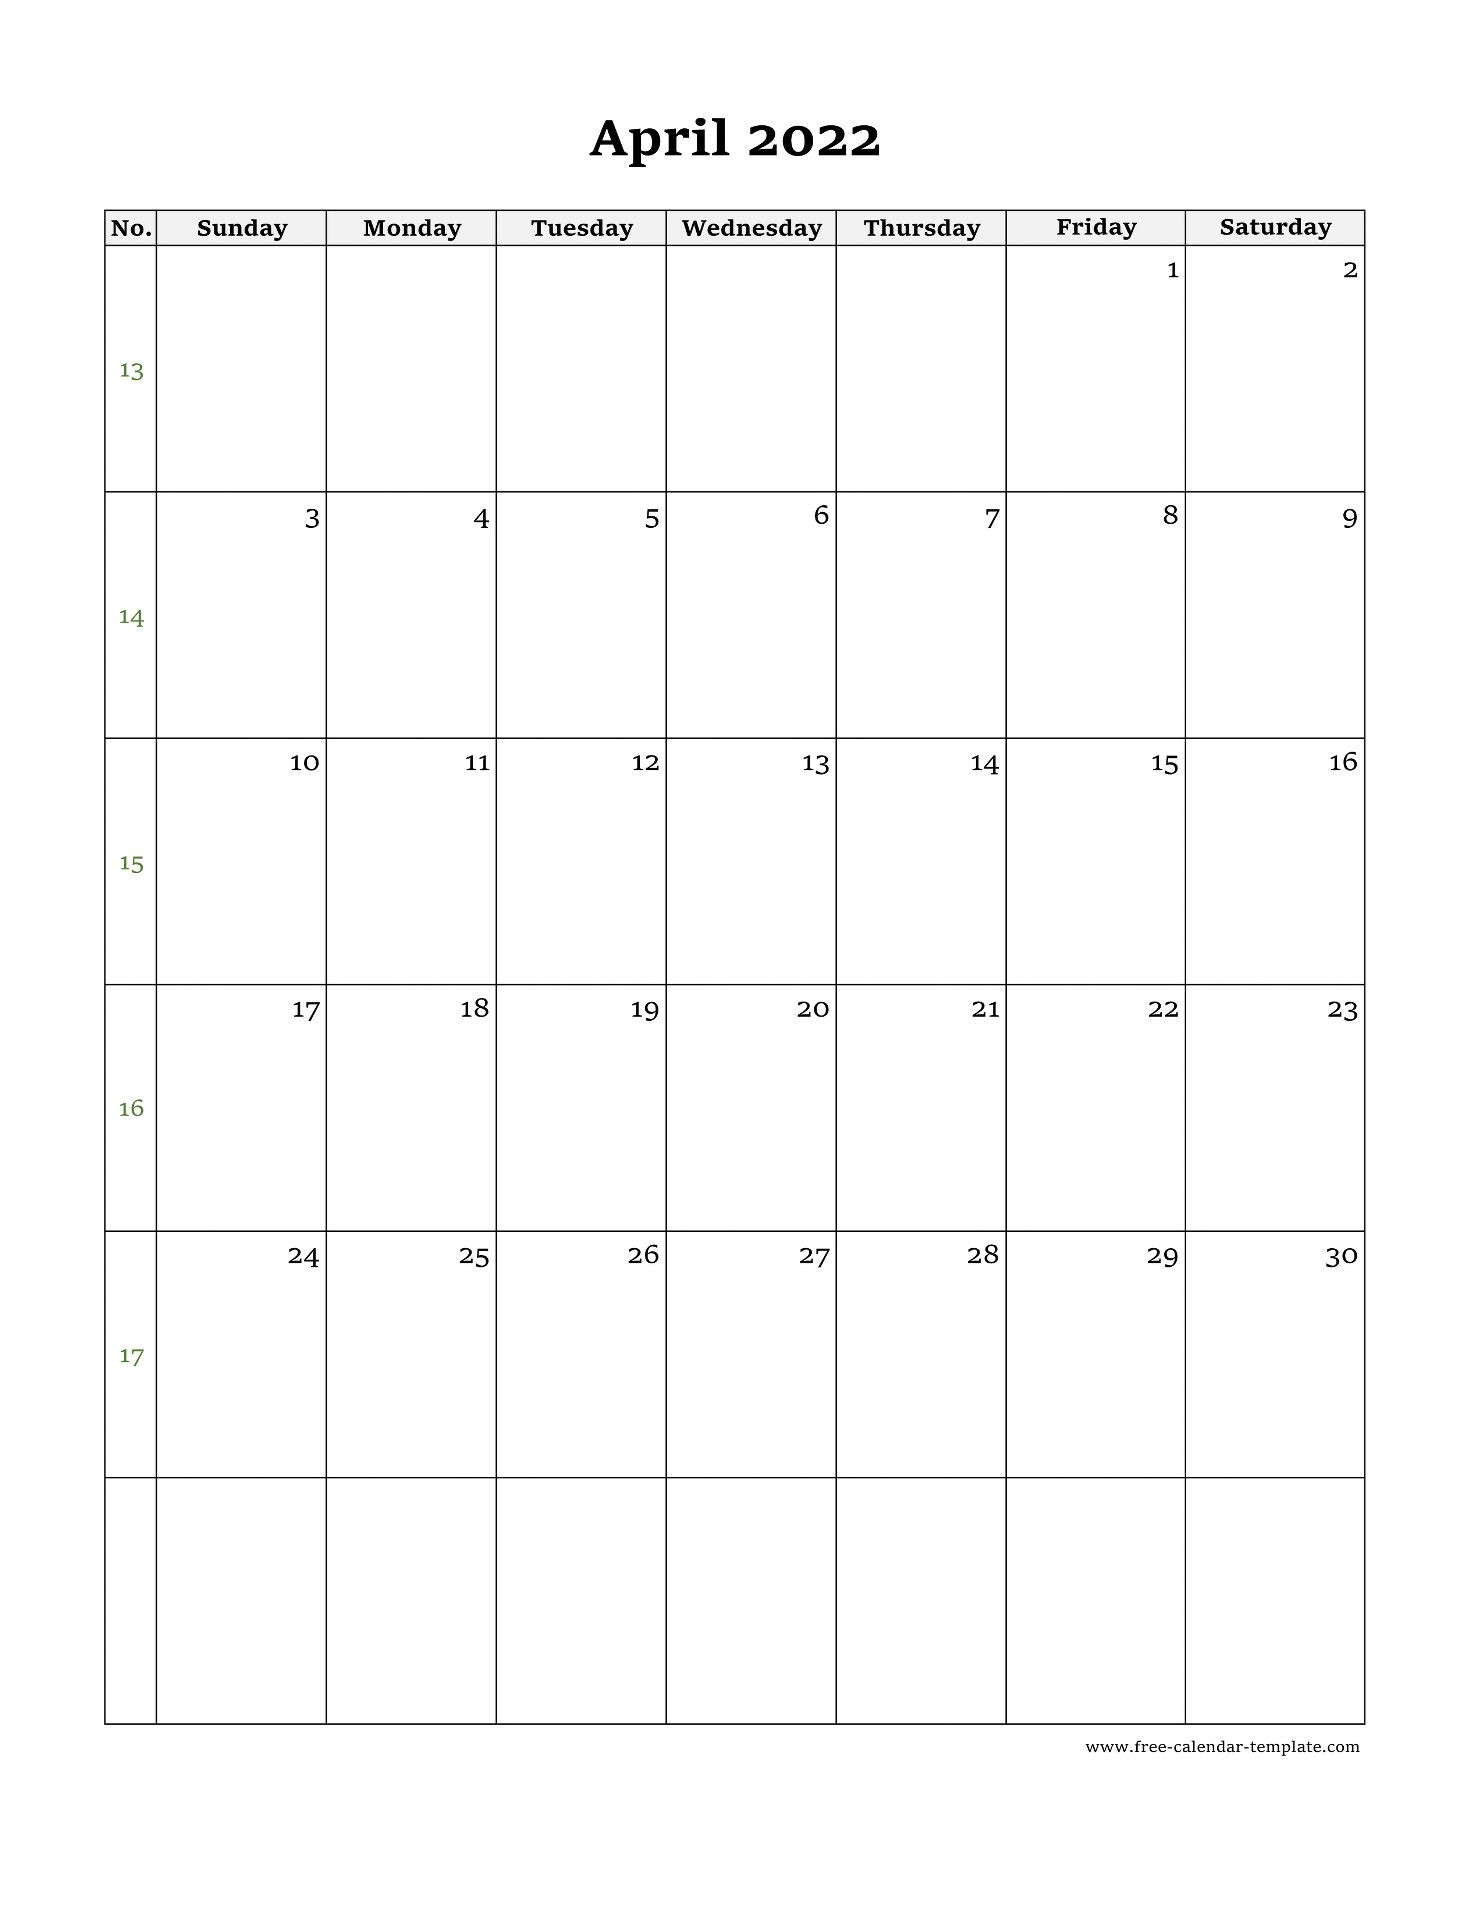 April Calendar 2022 Simple Design With Large Box On Each  April Calendar For 2022